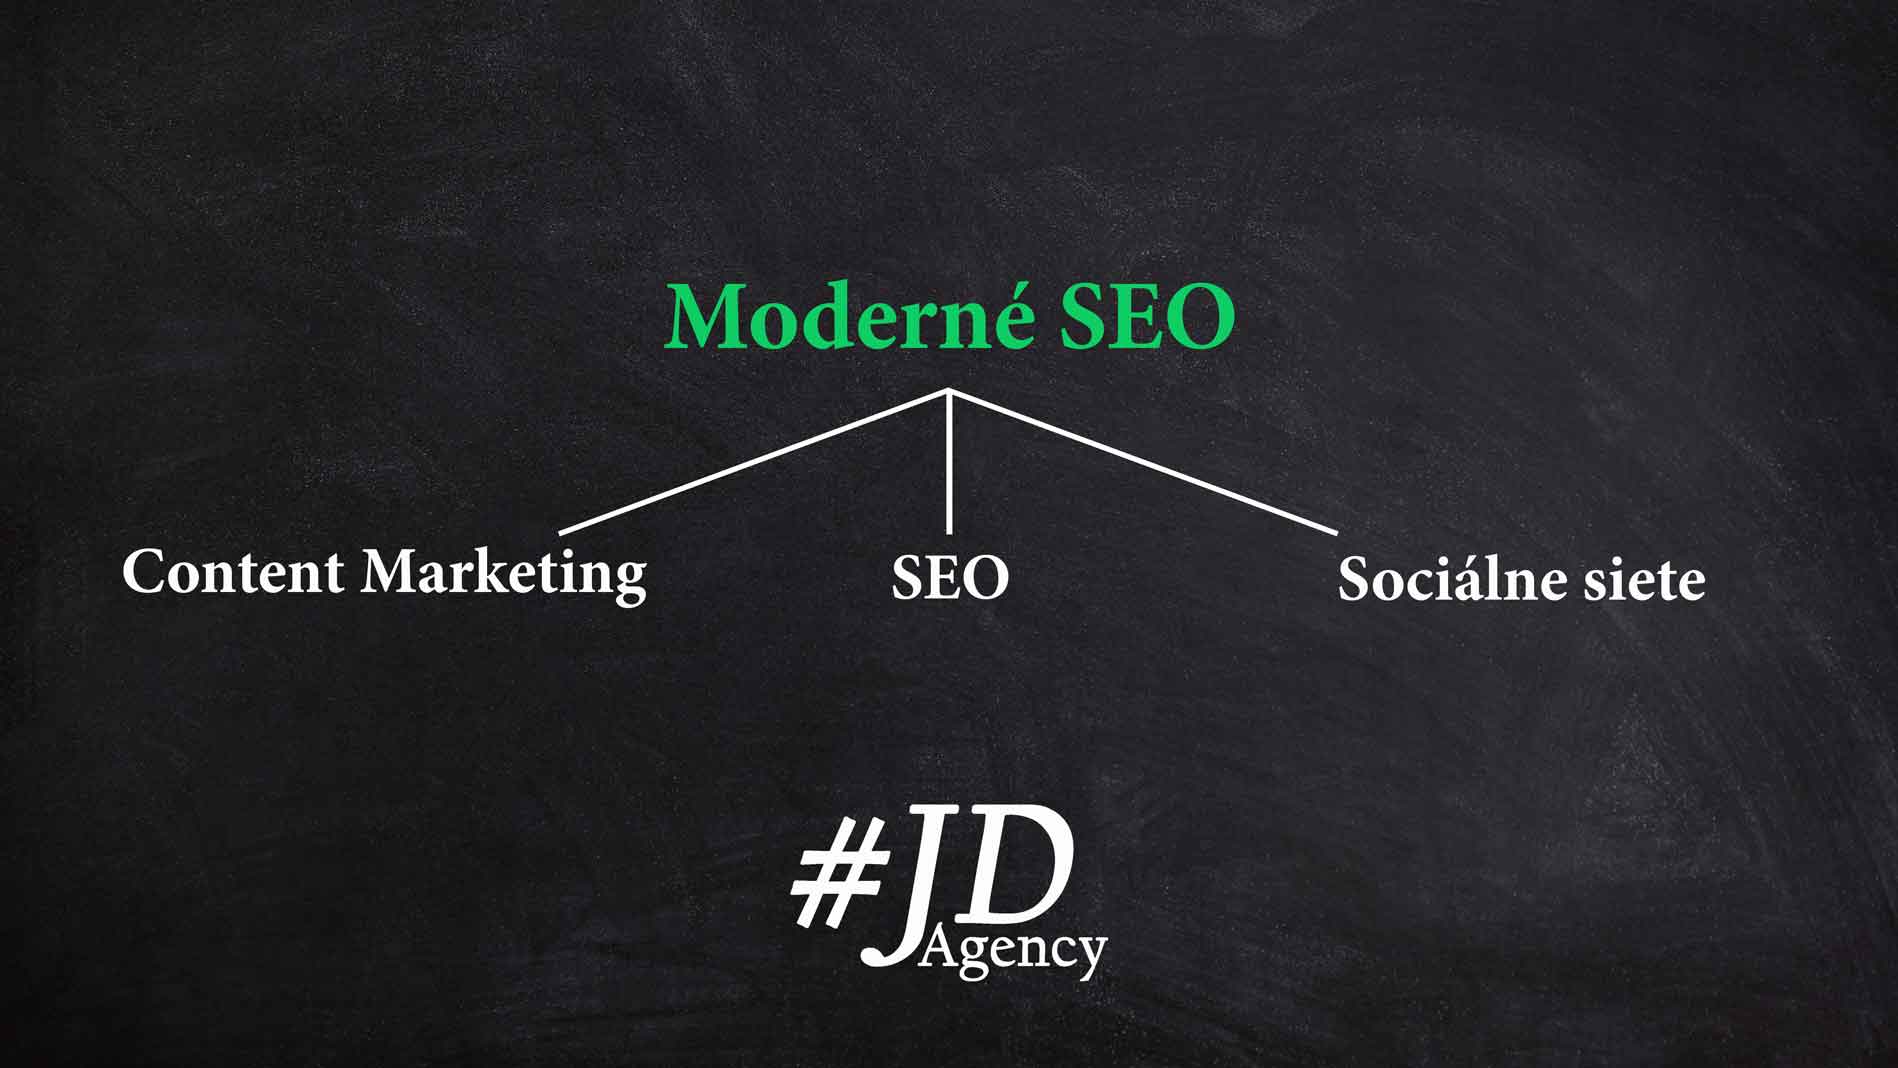 Moderne SEO JD Agency